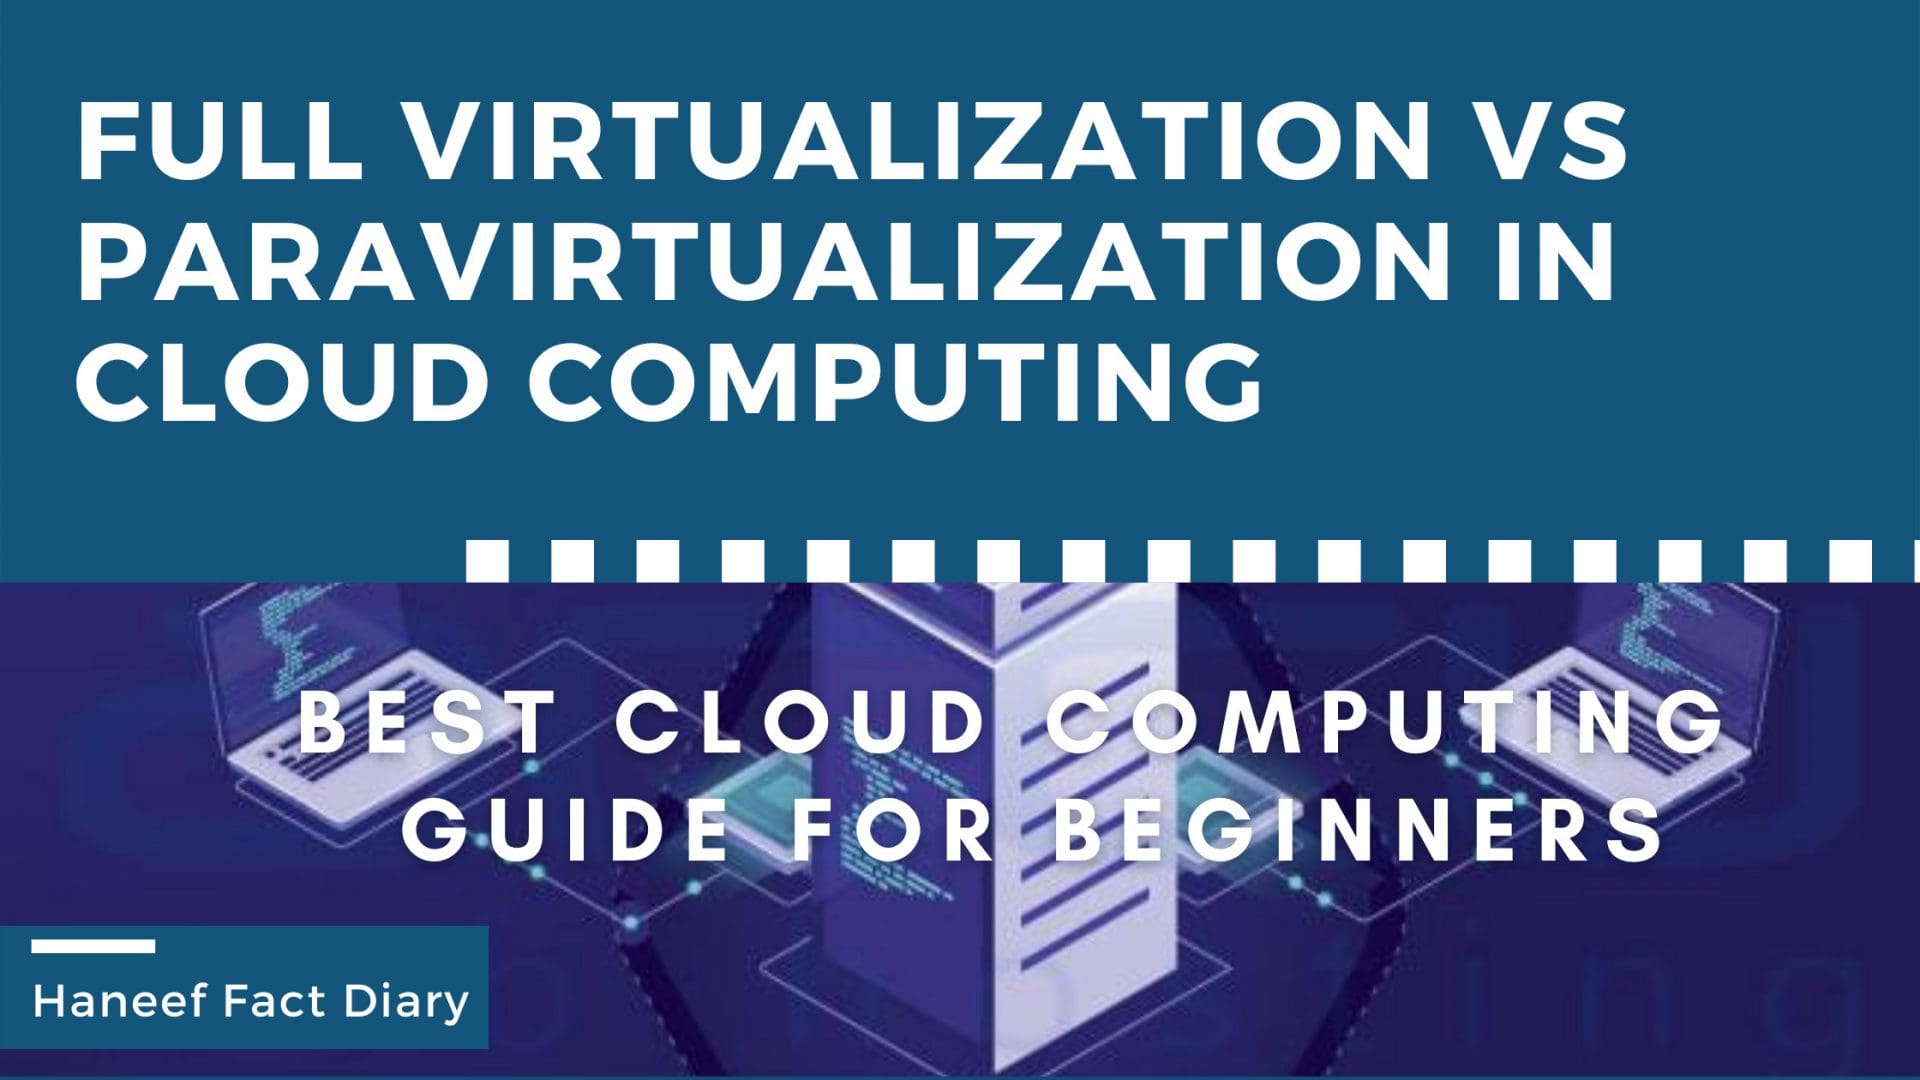 Full virtualization vs Paravirtualization in cloud computing